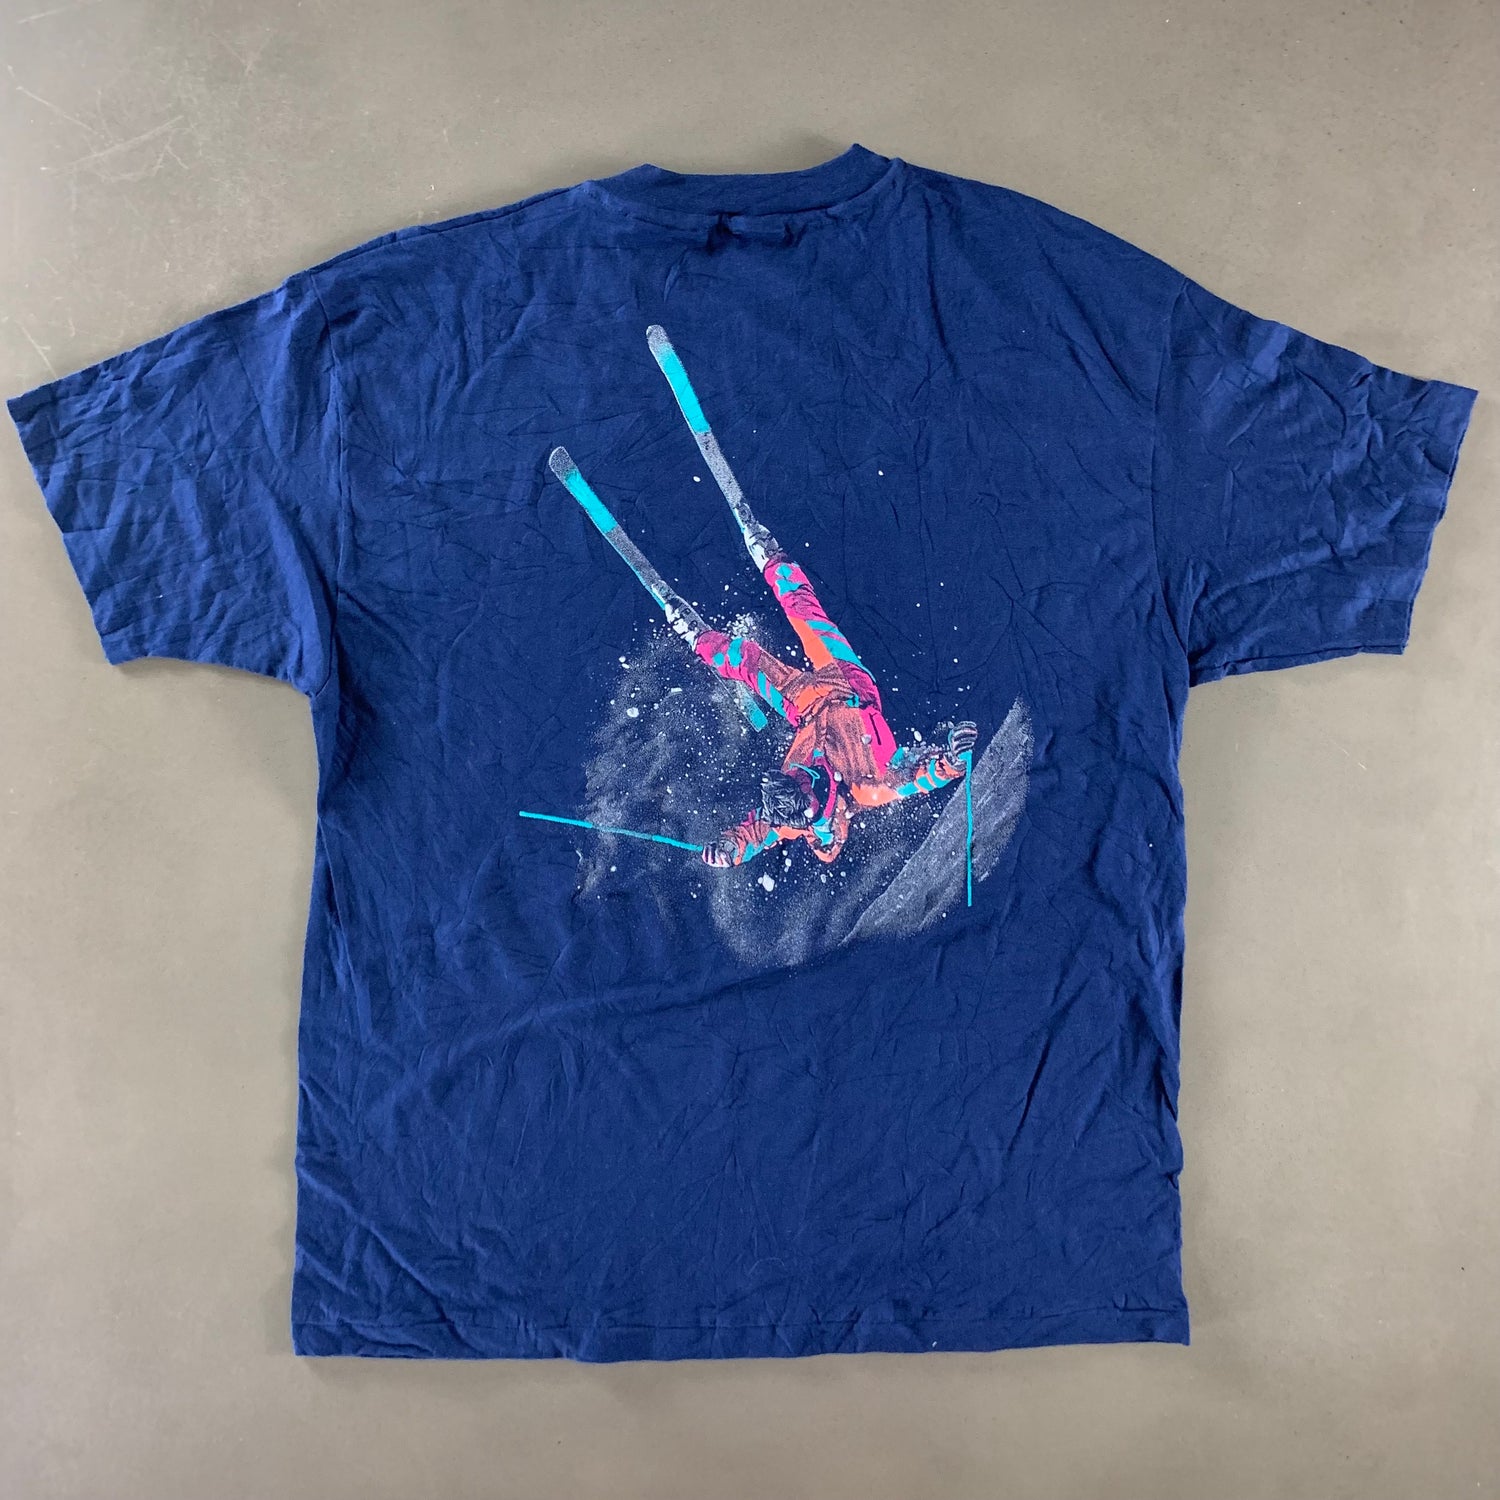 Vintage 1989 Brighton Utah T-shirt size XL